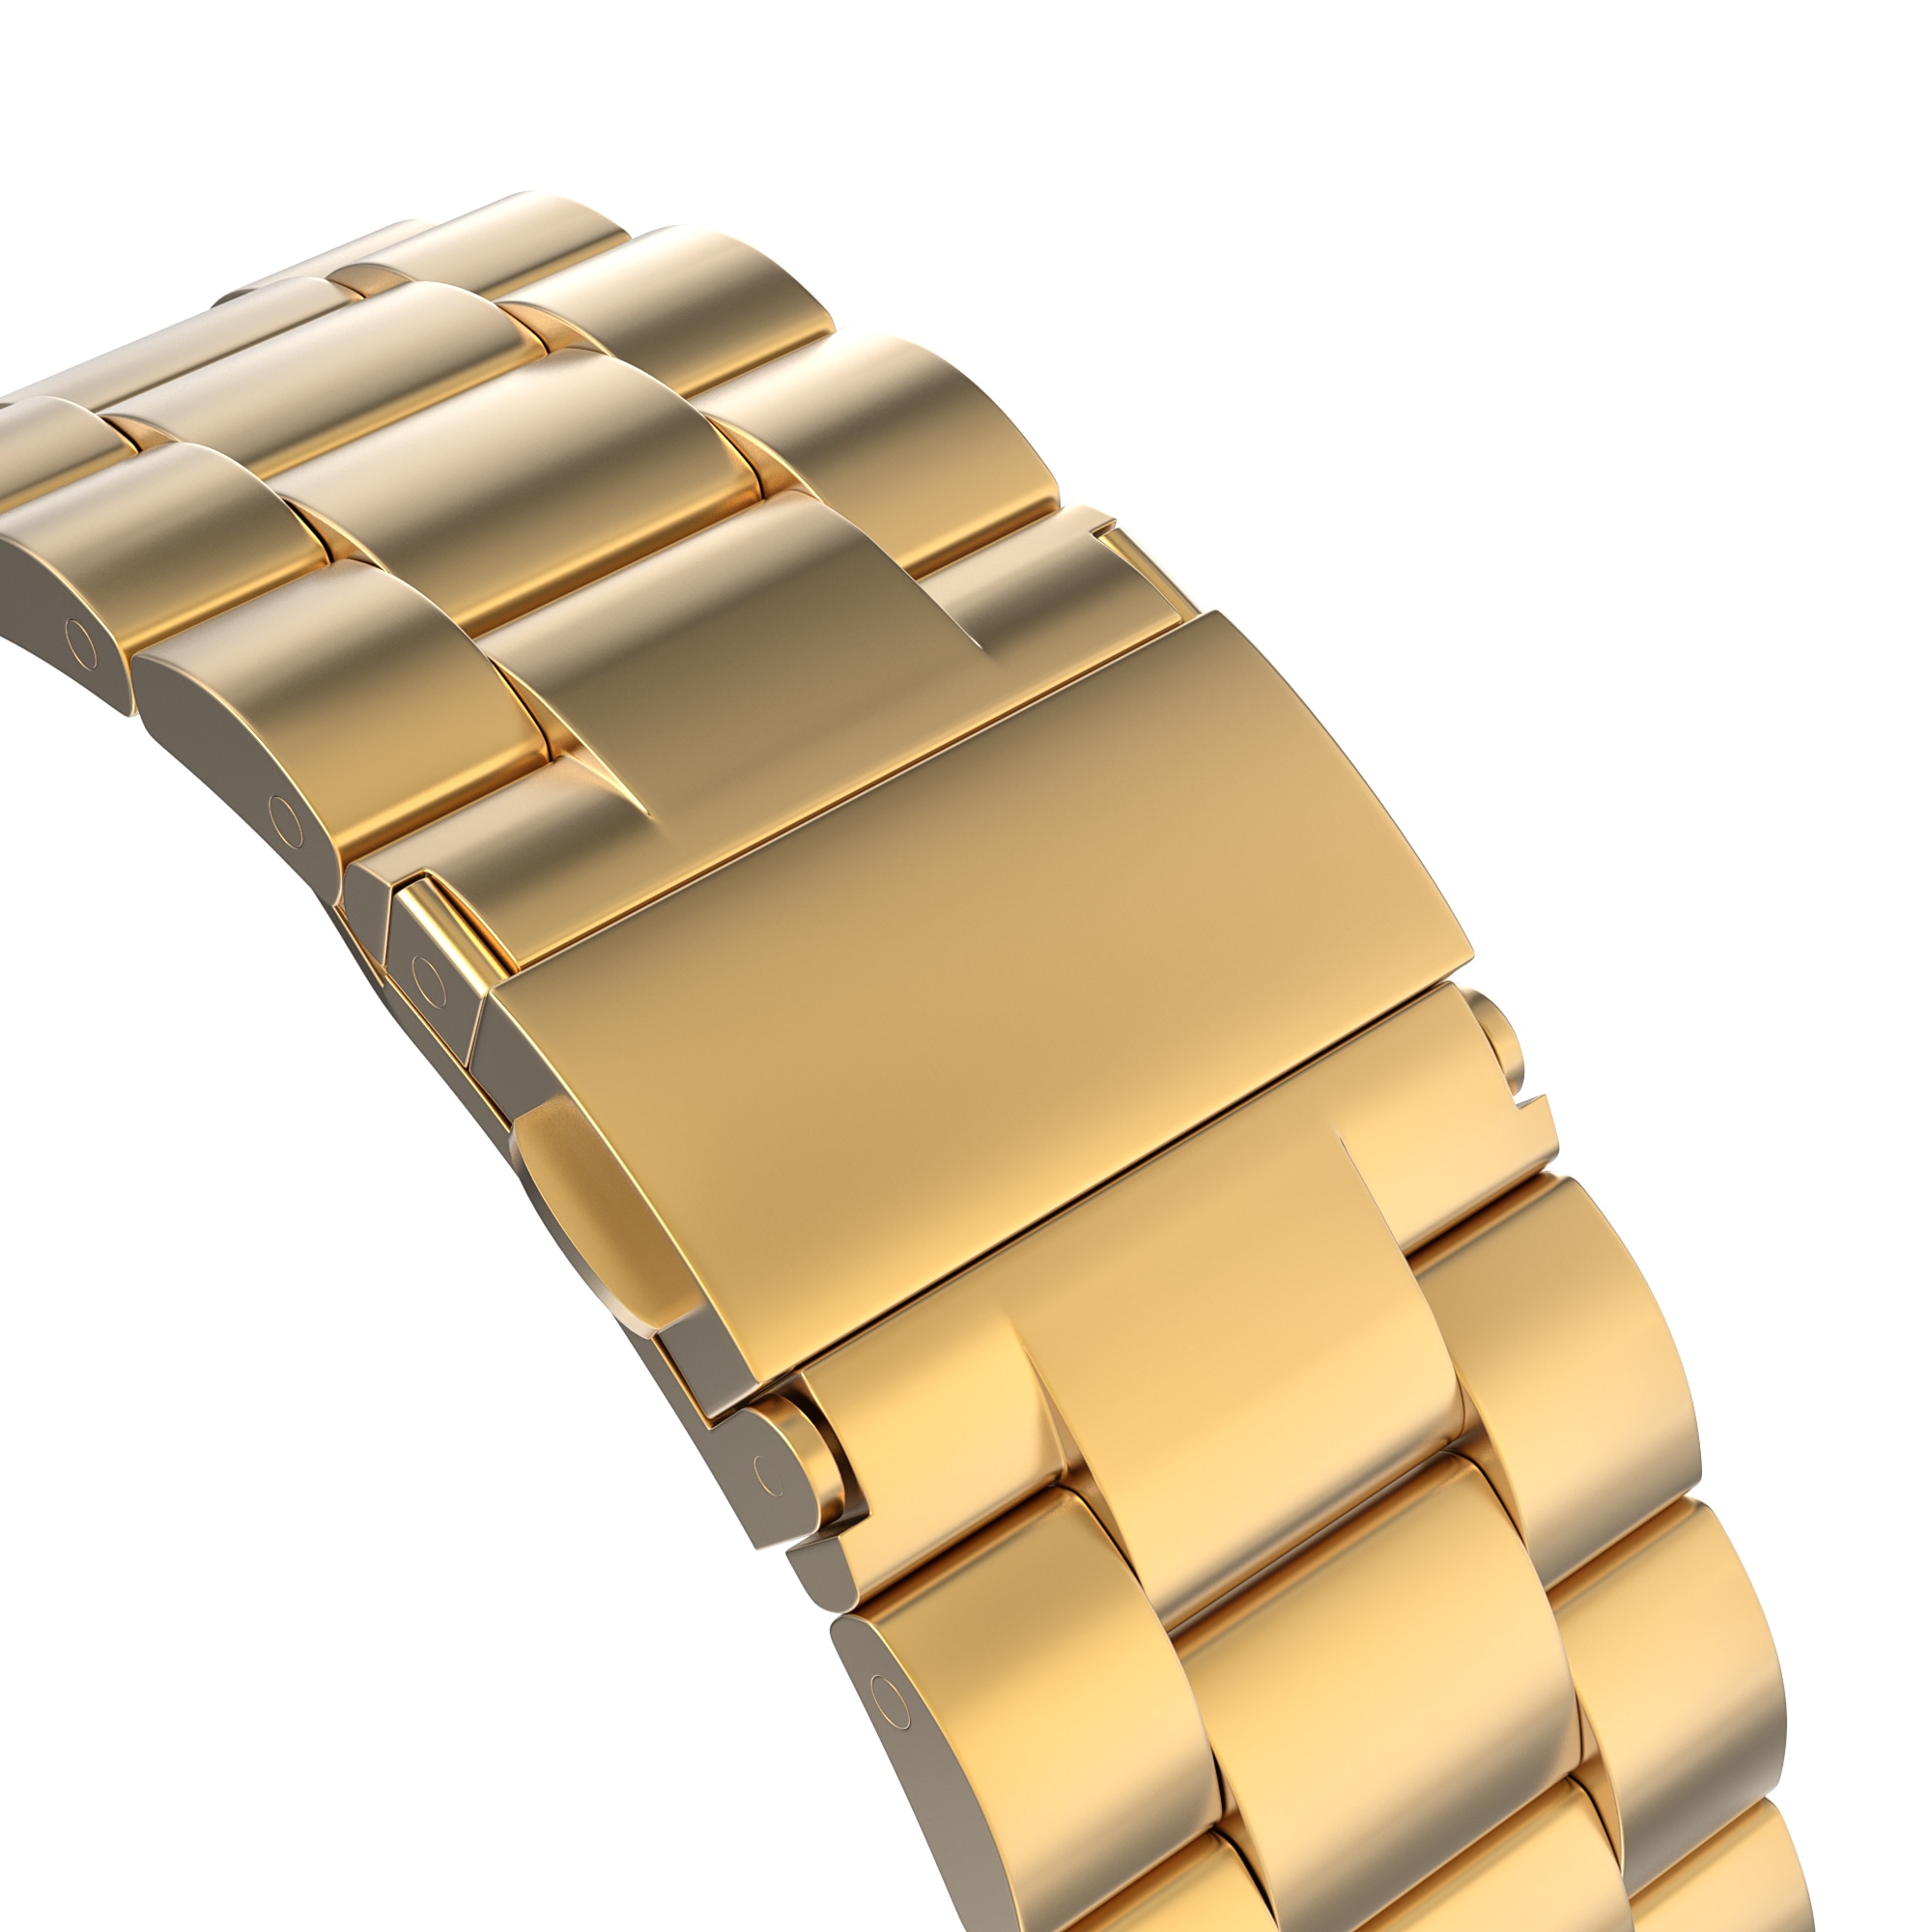 Metallarmband Apple Watch 38mm guld